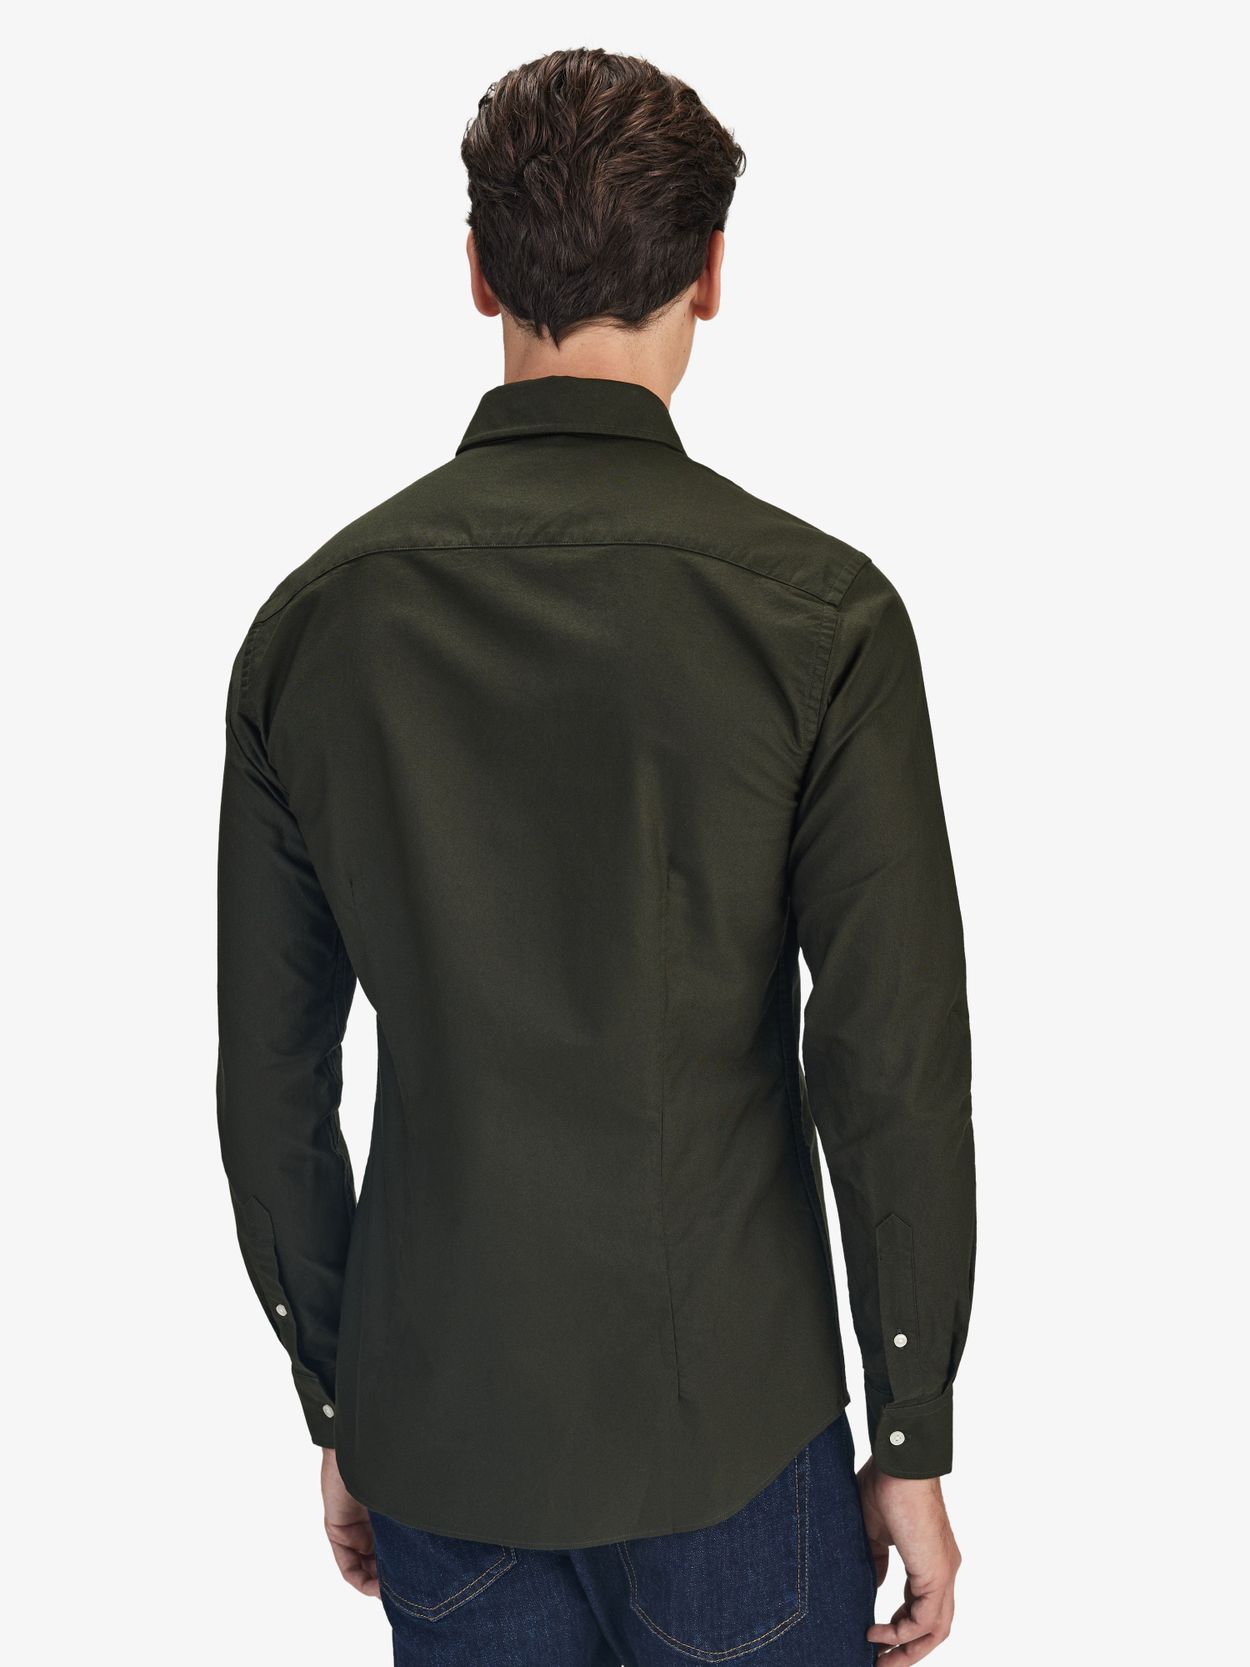 Oxford shirt Regular Fit - Dark green marl - Men